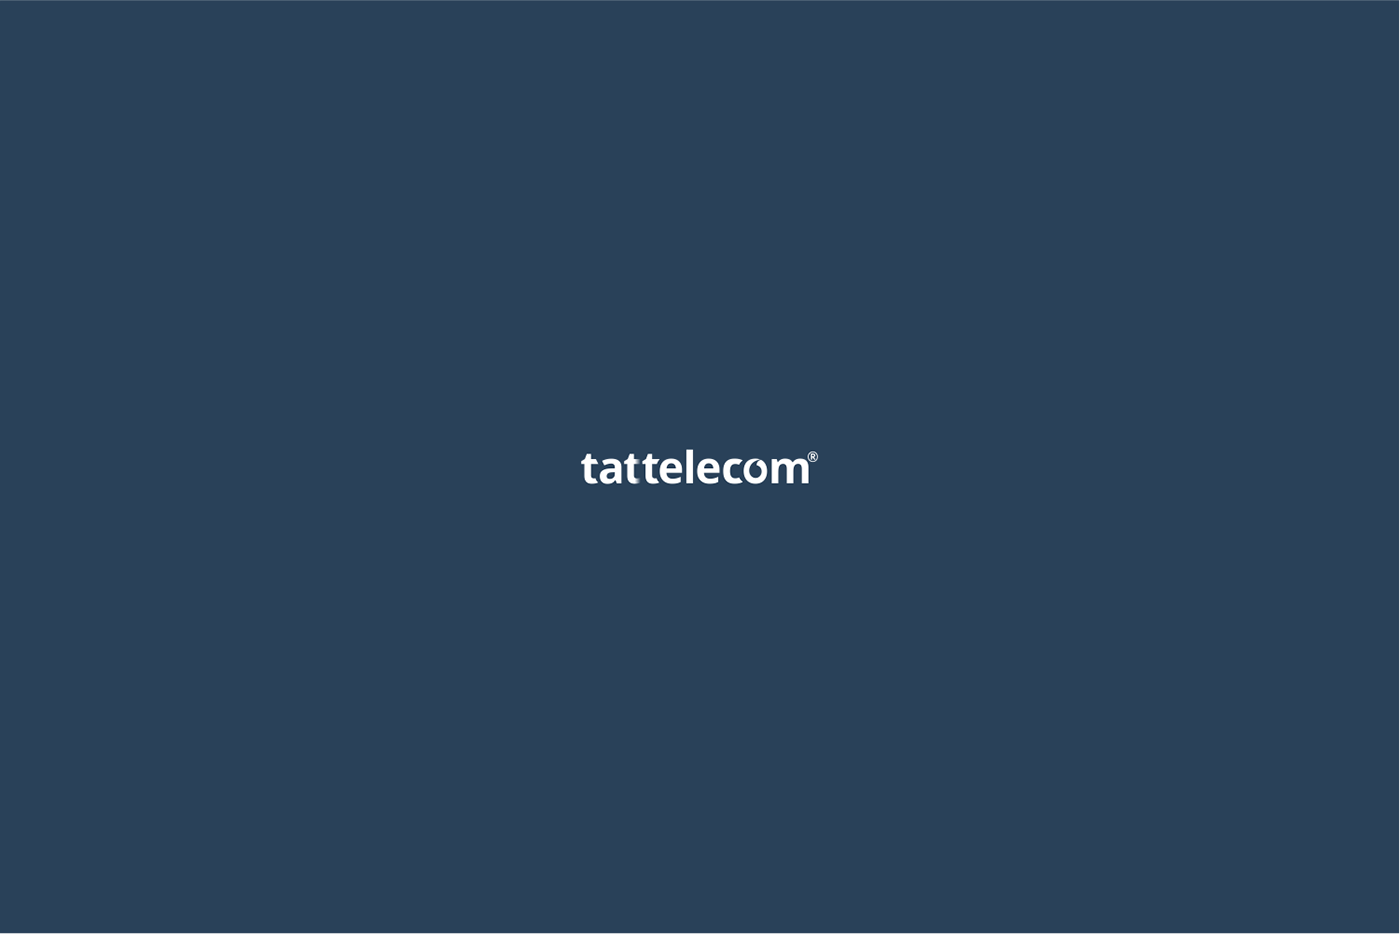 telecommunications communications Internet network tattelecom tele identity таттелеком rebranding